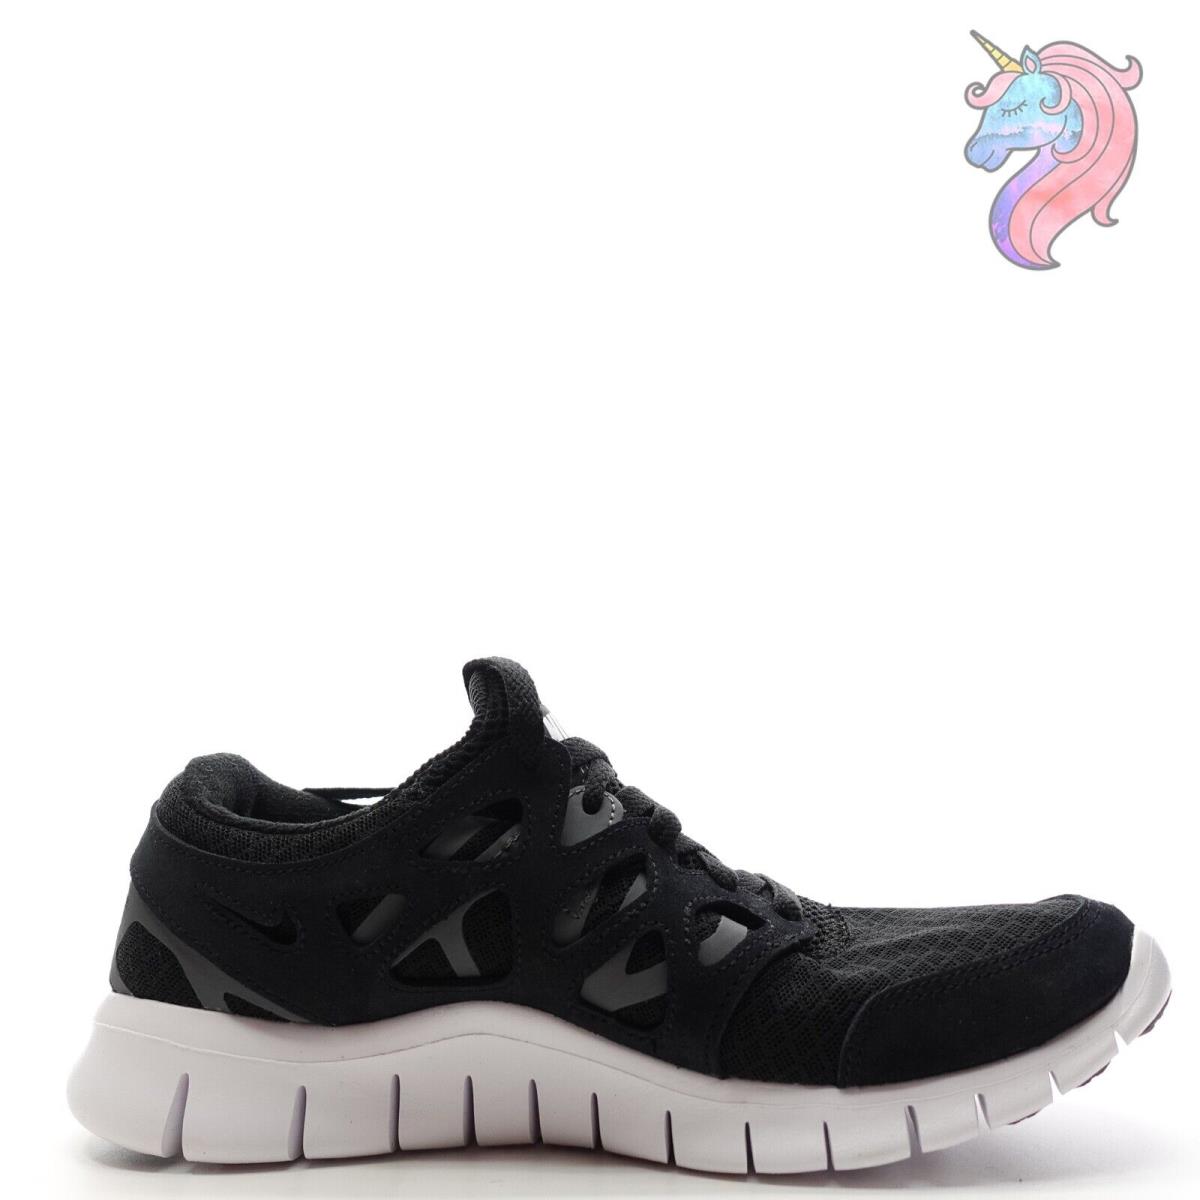 Nike shoes Free Run - Black, White 1